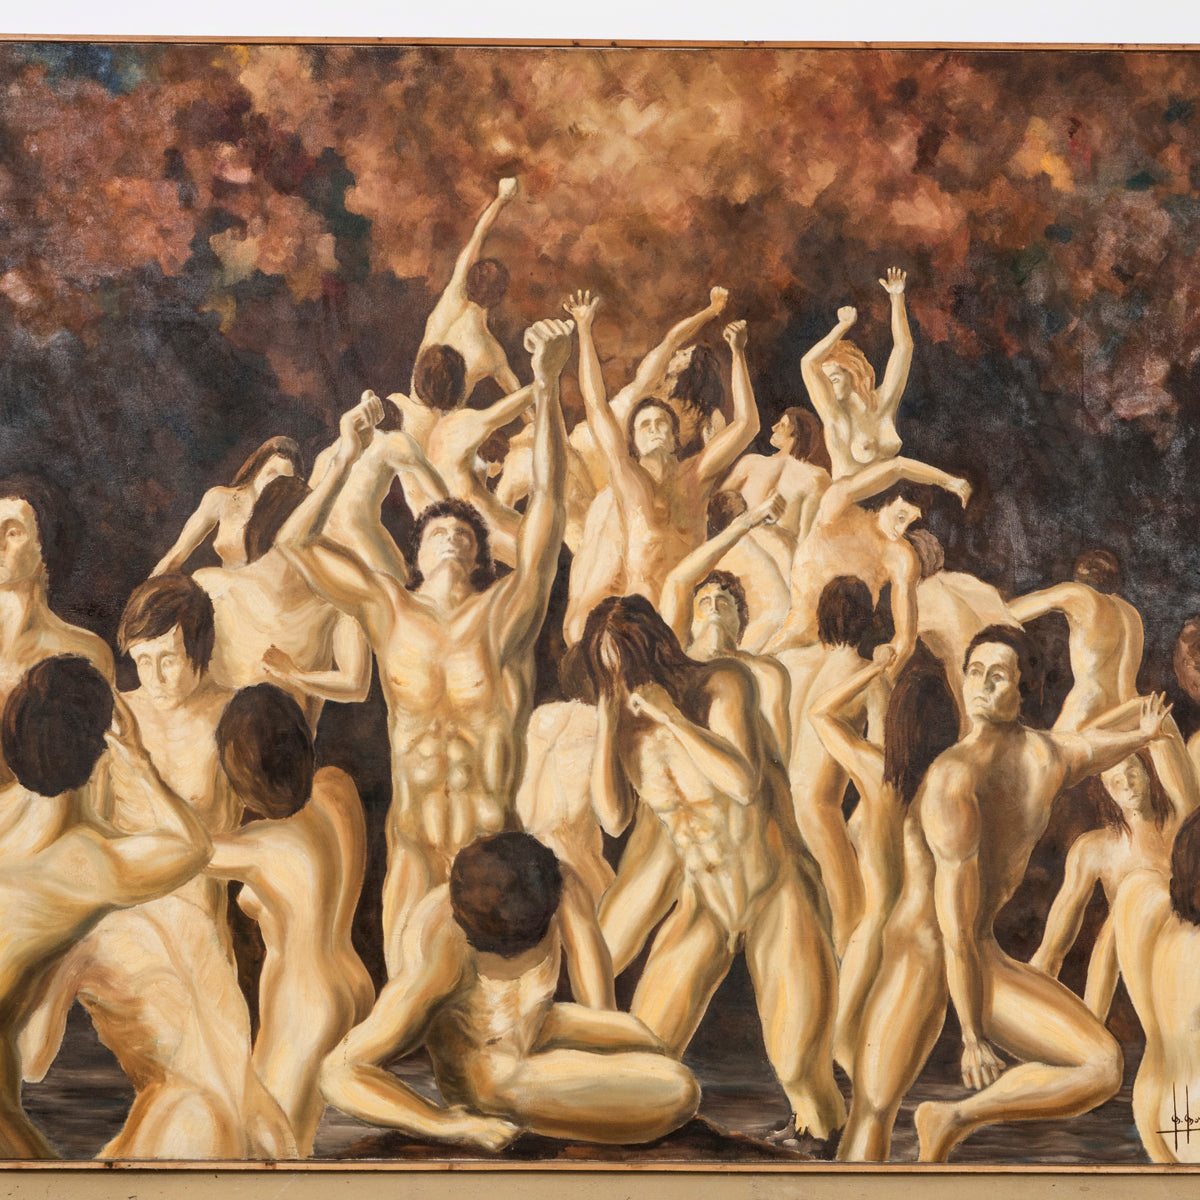 70s "Purgatory" Oil Painting